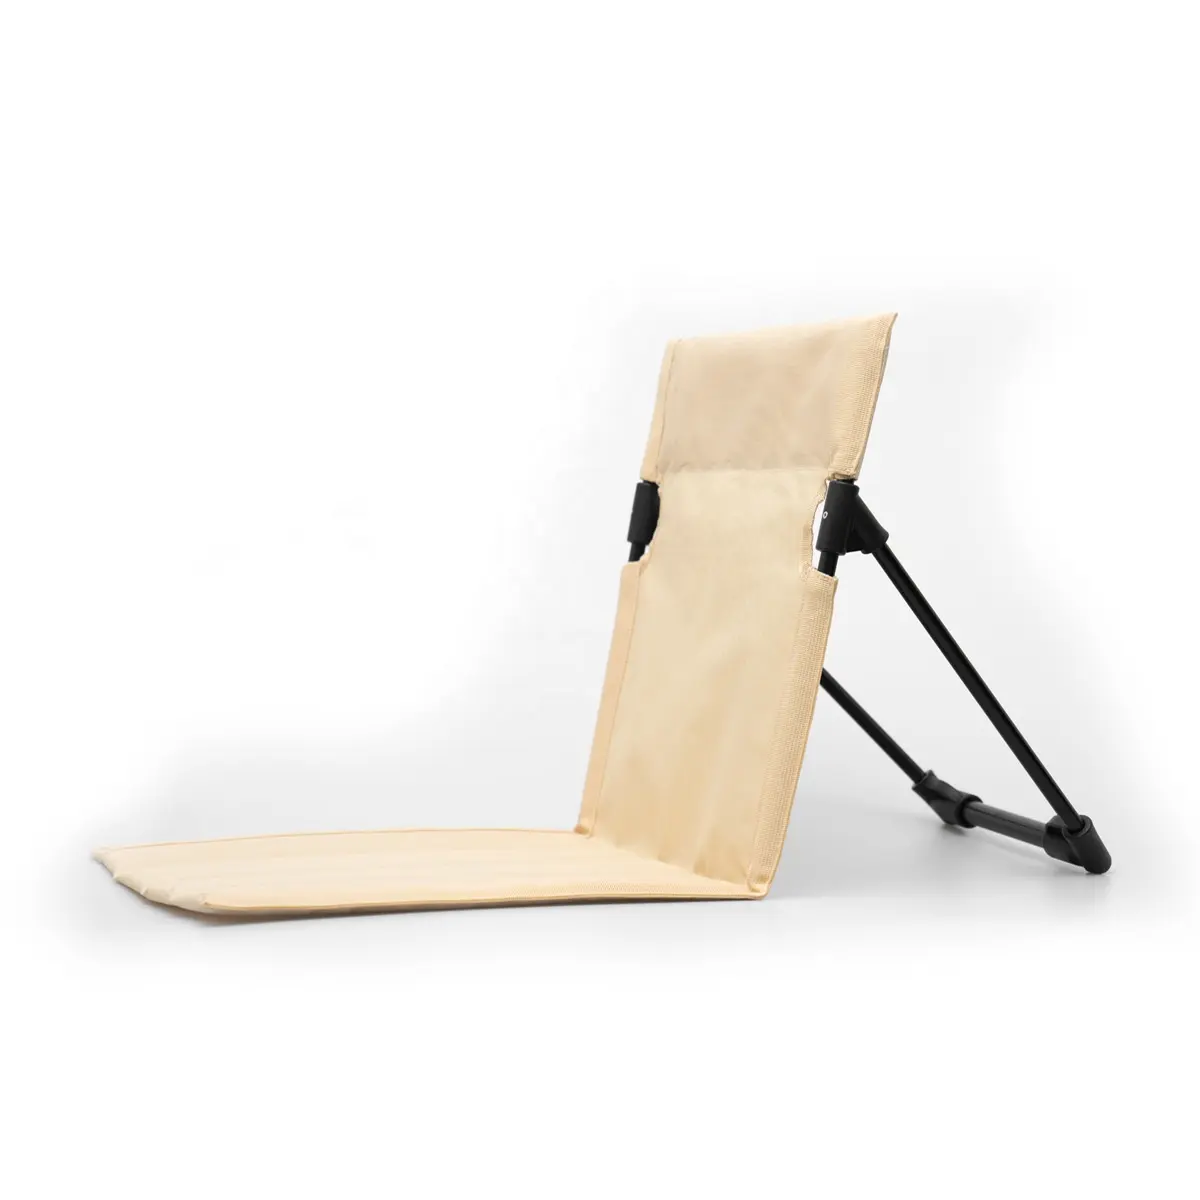 Aluminium Rückenlehne Single Lazy Chair Outdoor Tragbare Leichte Klapp Camping Stuhl Großhandel